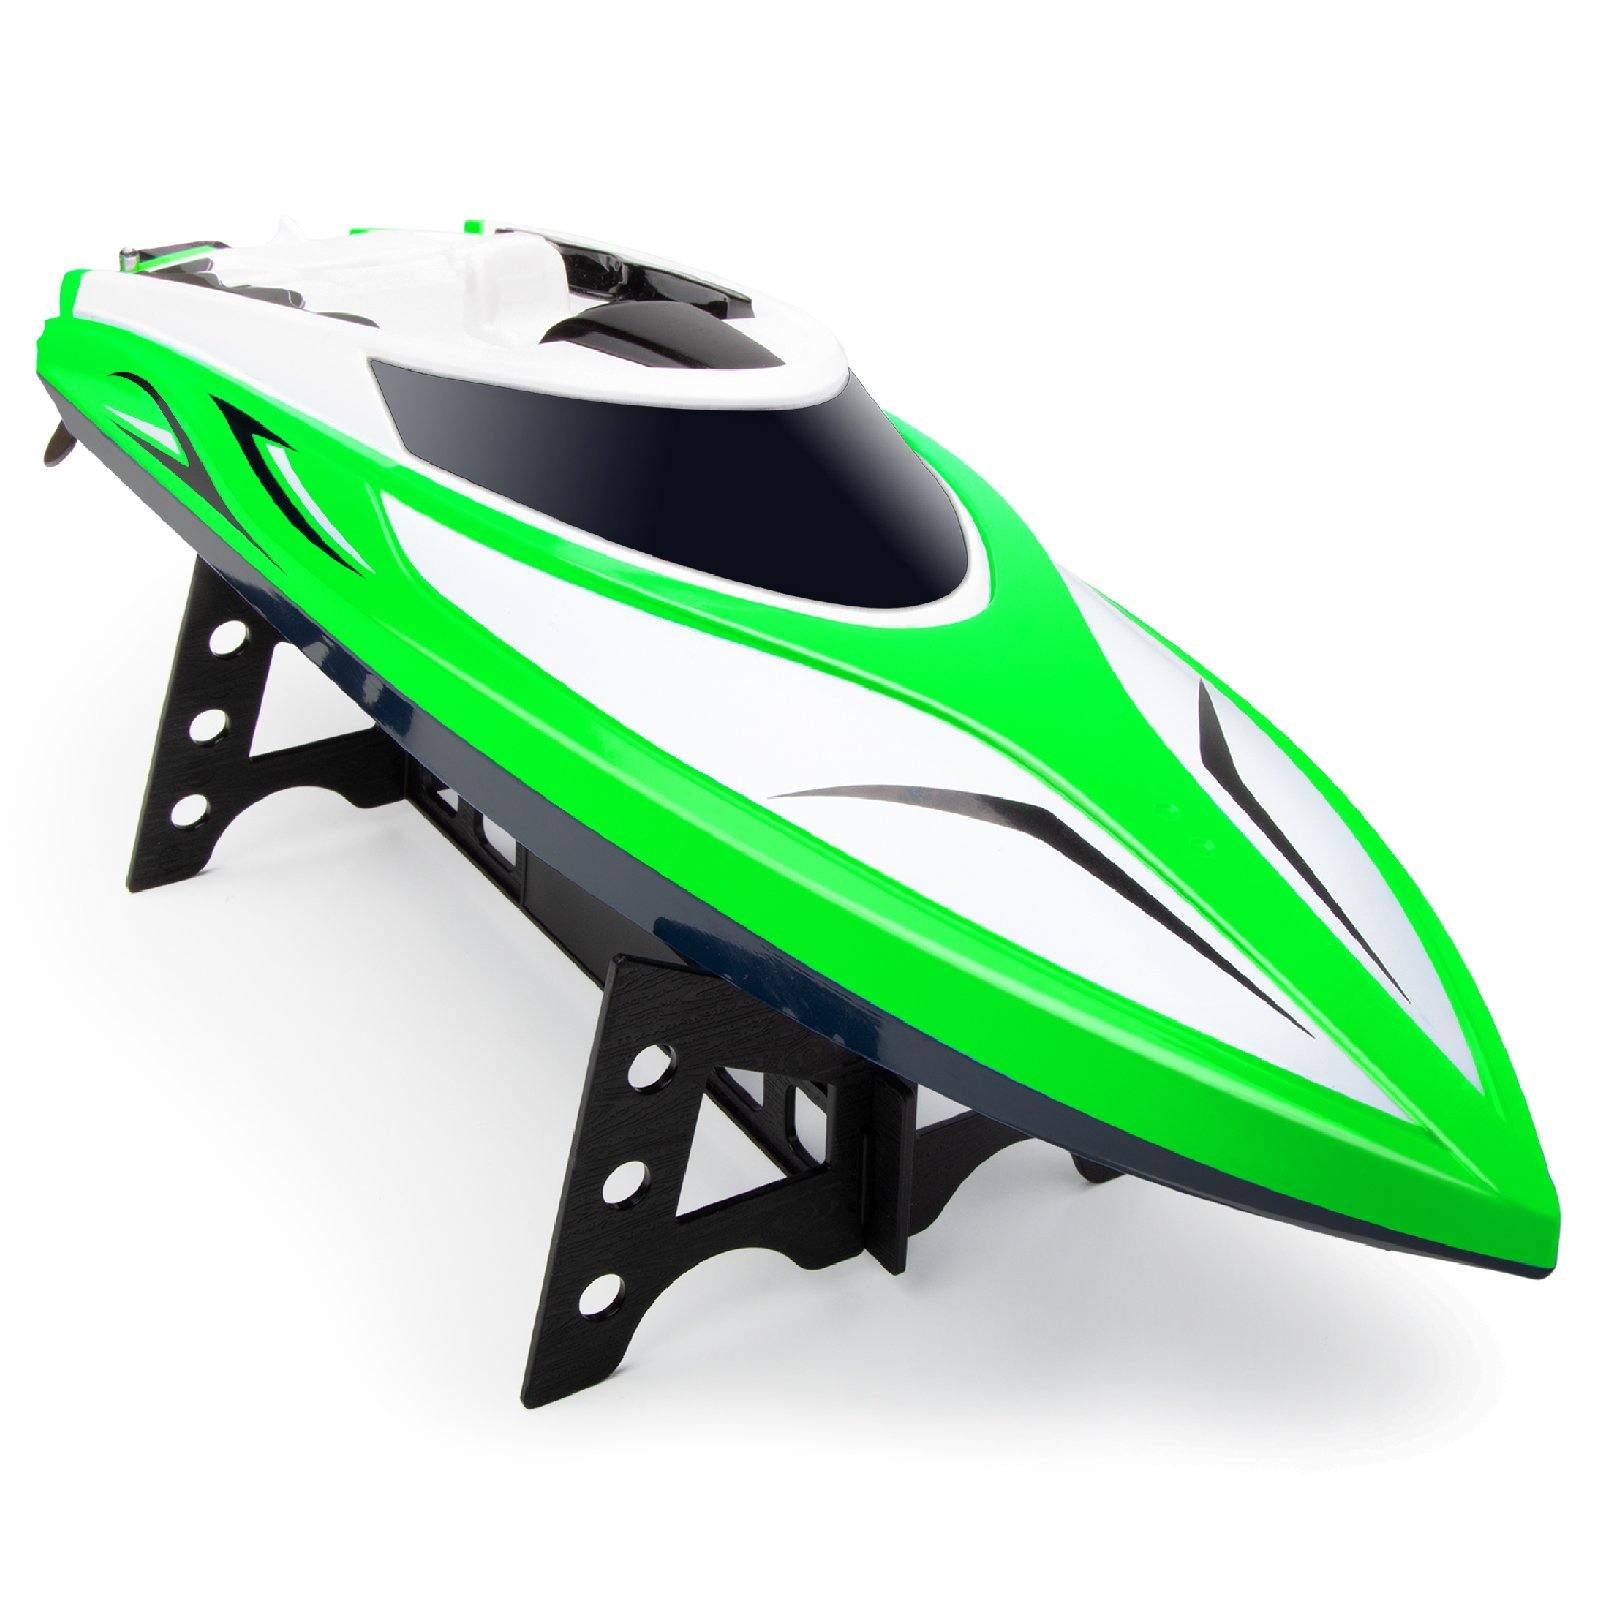 H102 Velocity RC Boat - USA Toyz